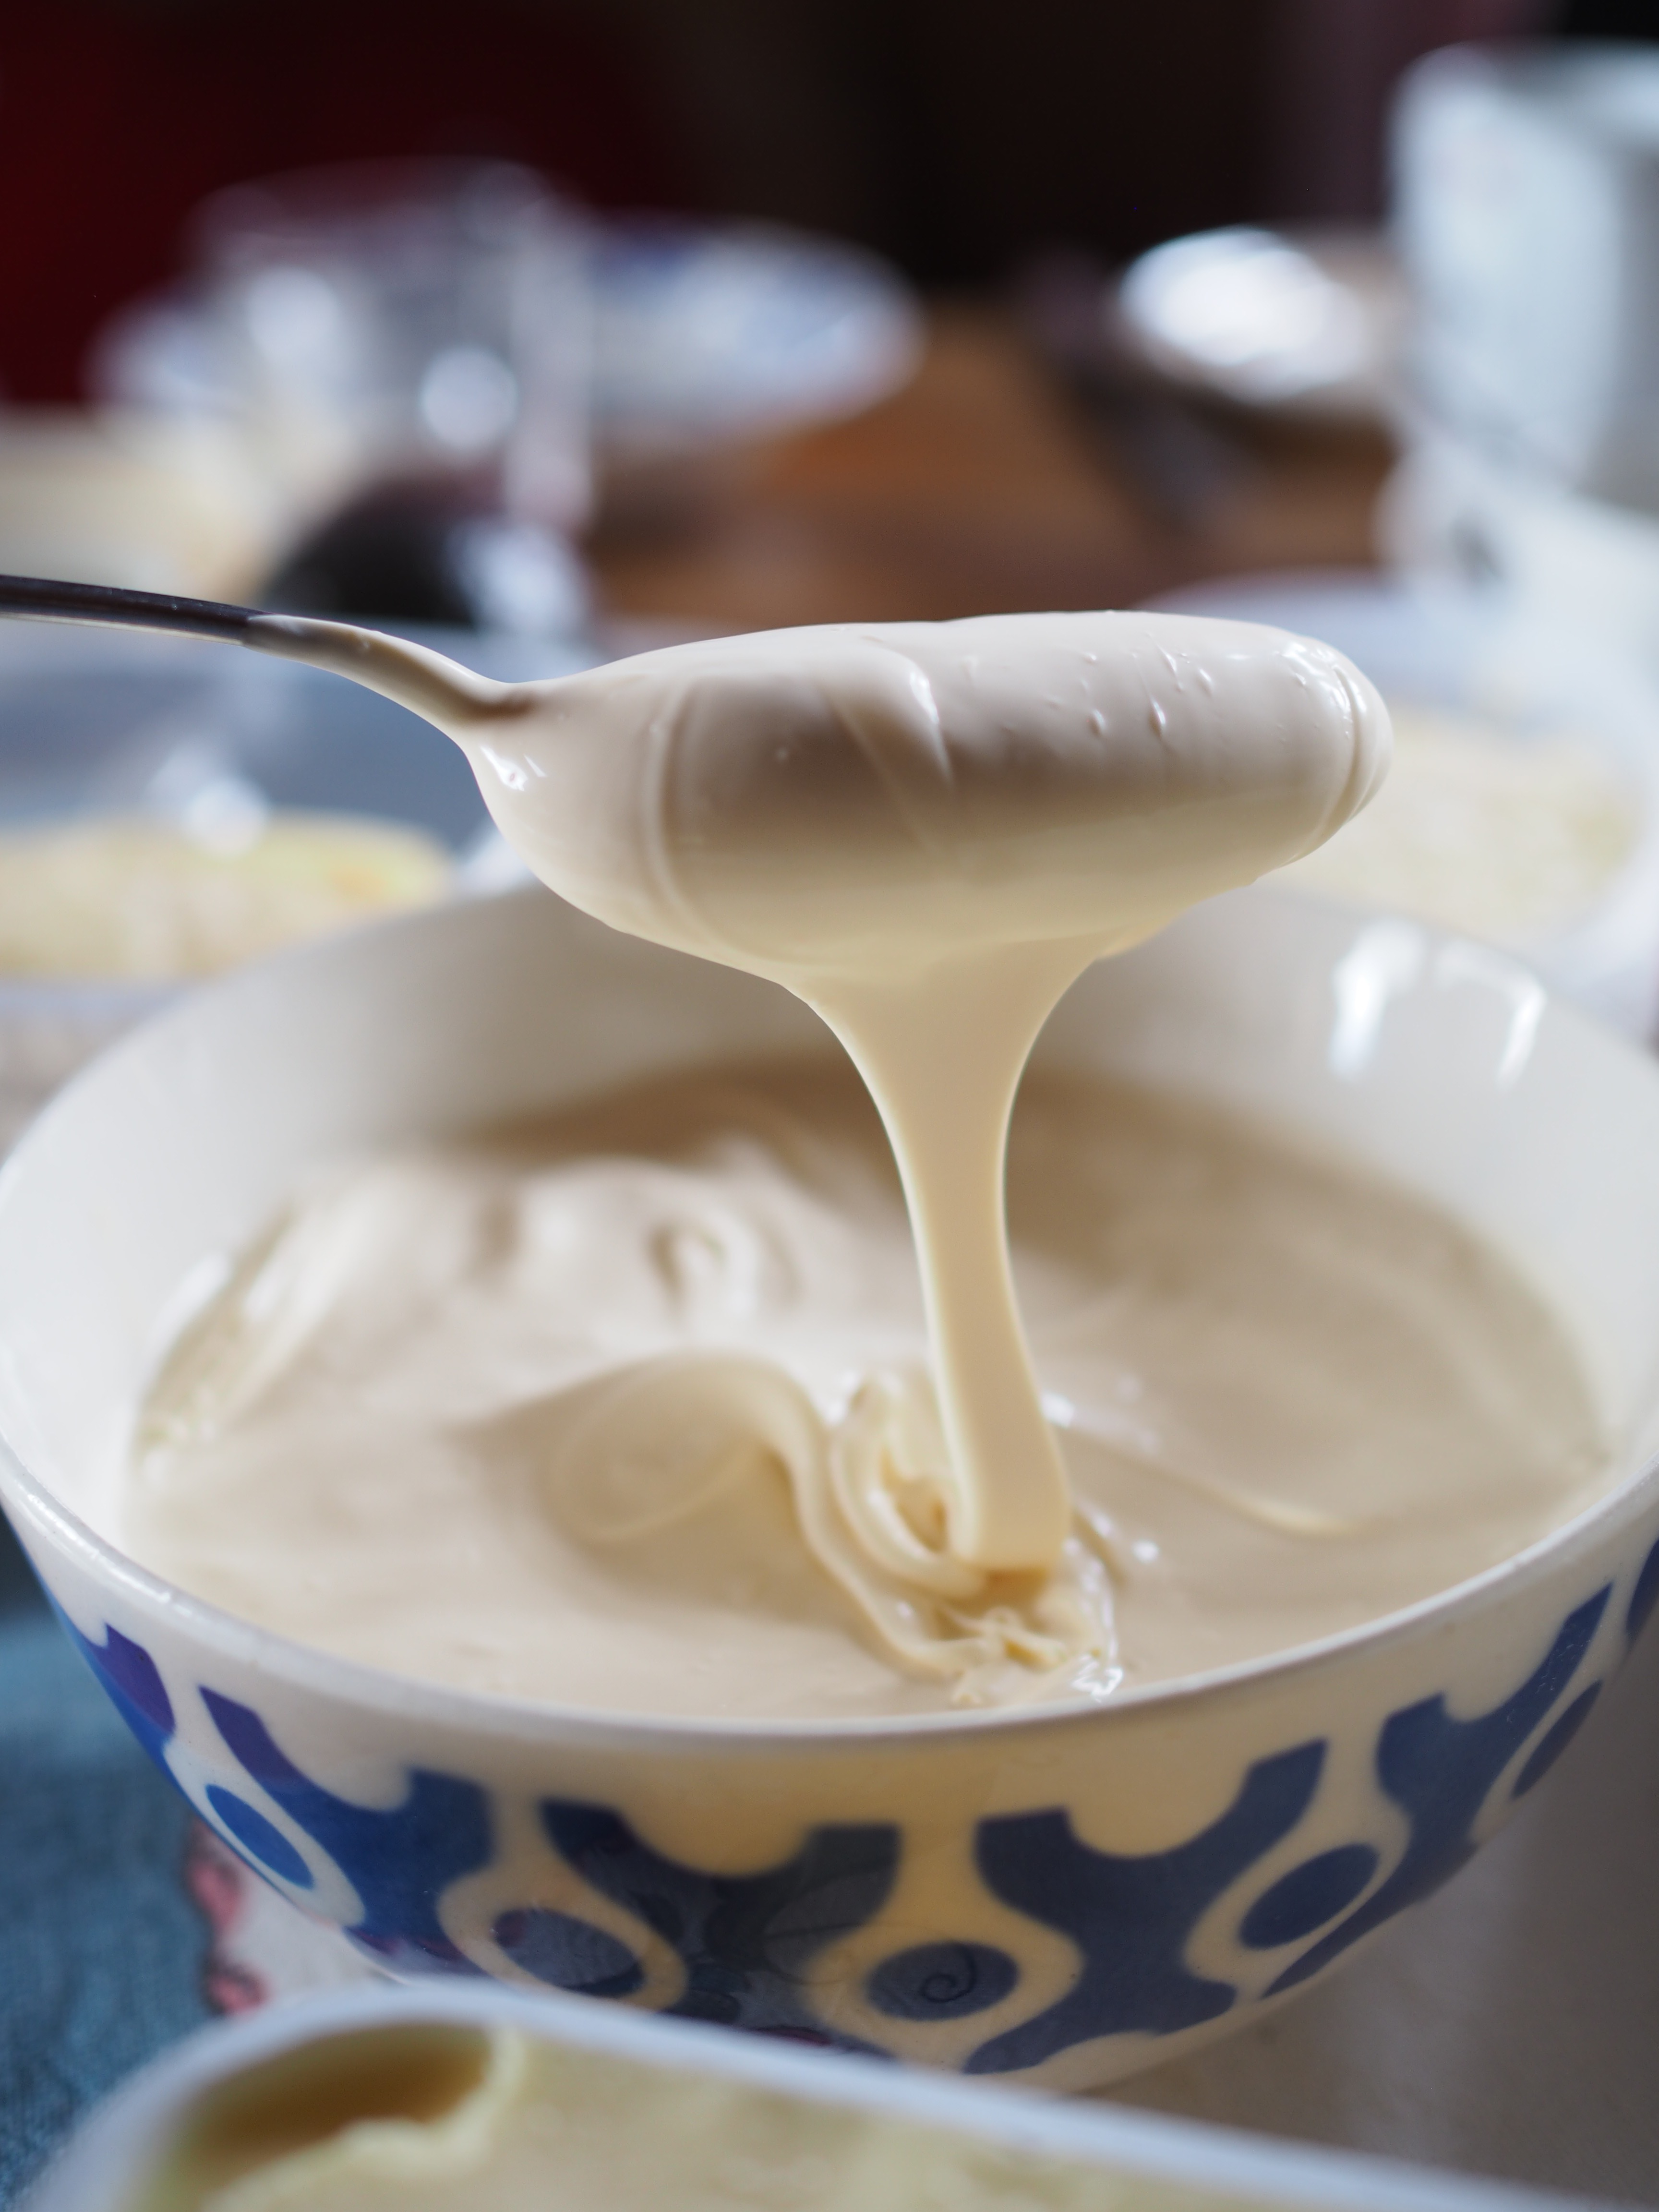 Rømmegrøt with Homemade Sour Cream